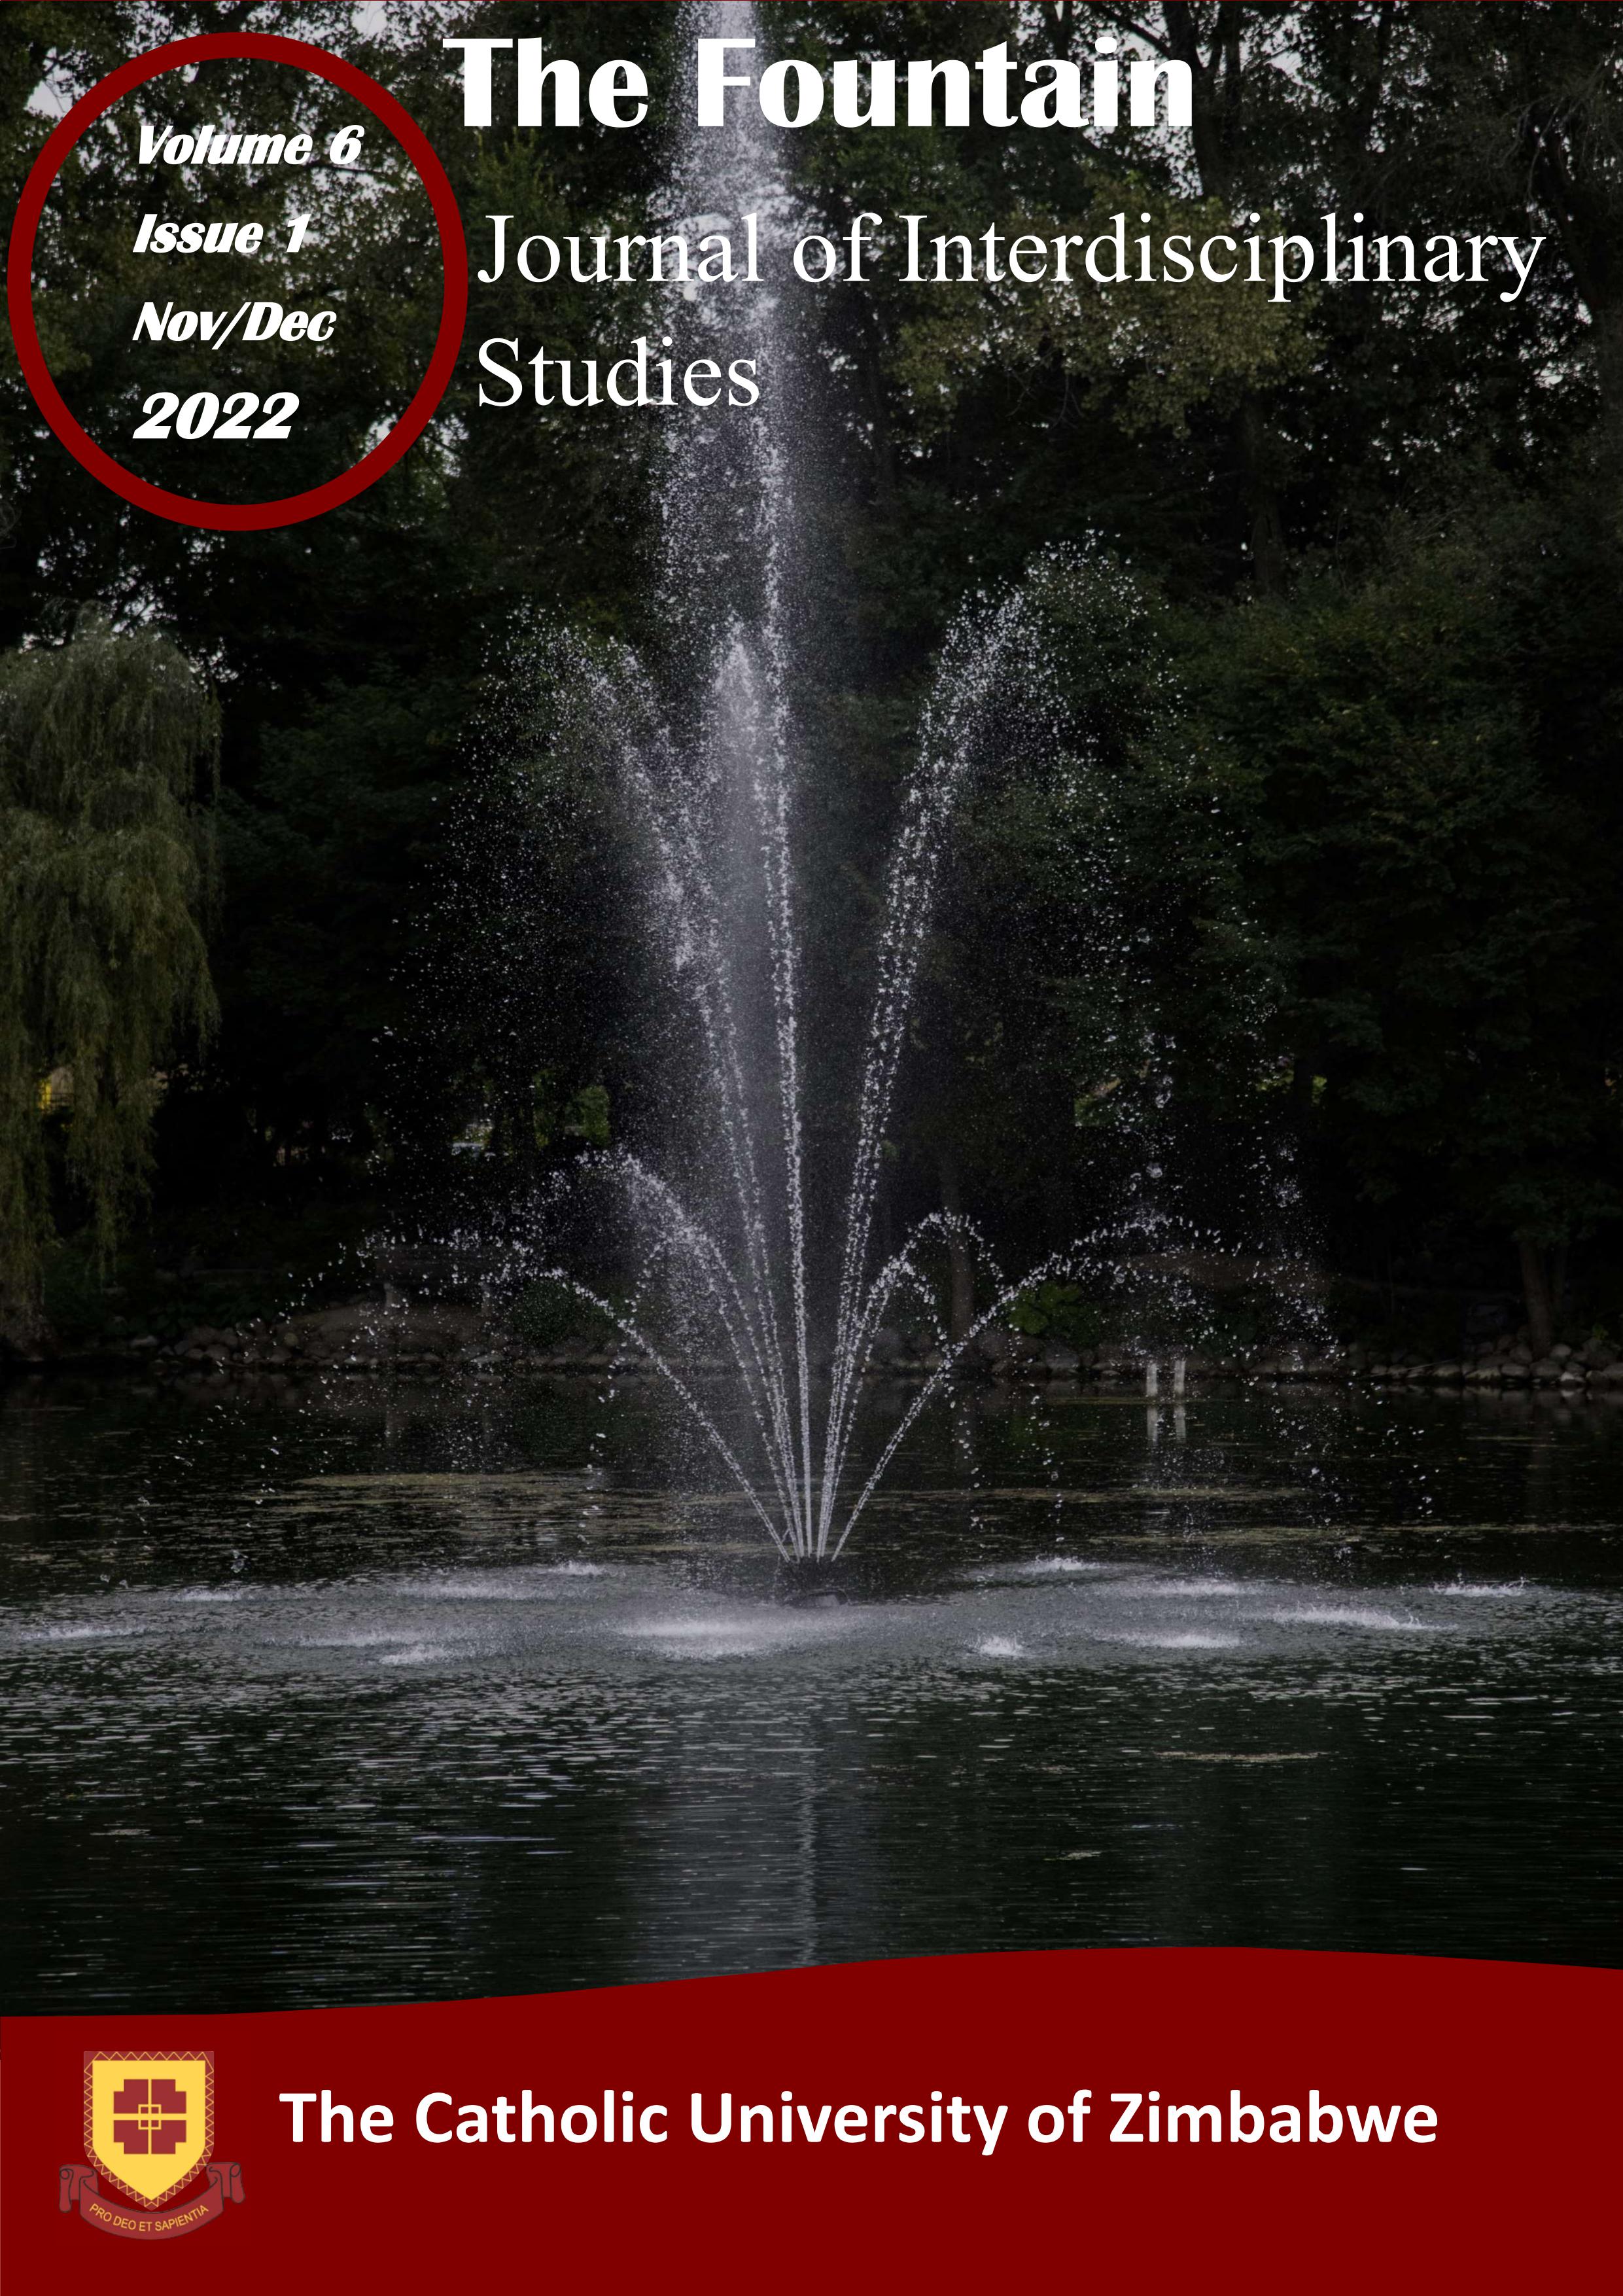 					View Vol. 6 No. 1 (2022): The Fountain Journal of Interdisciplinary Studies 
				